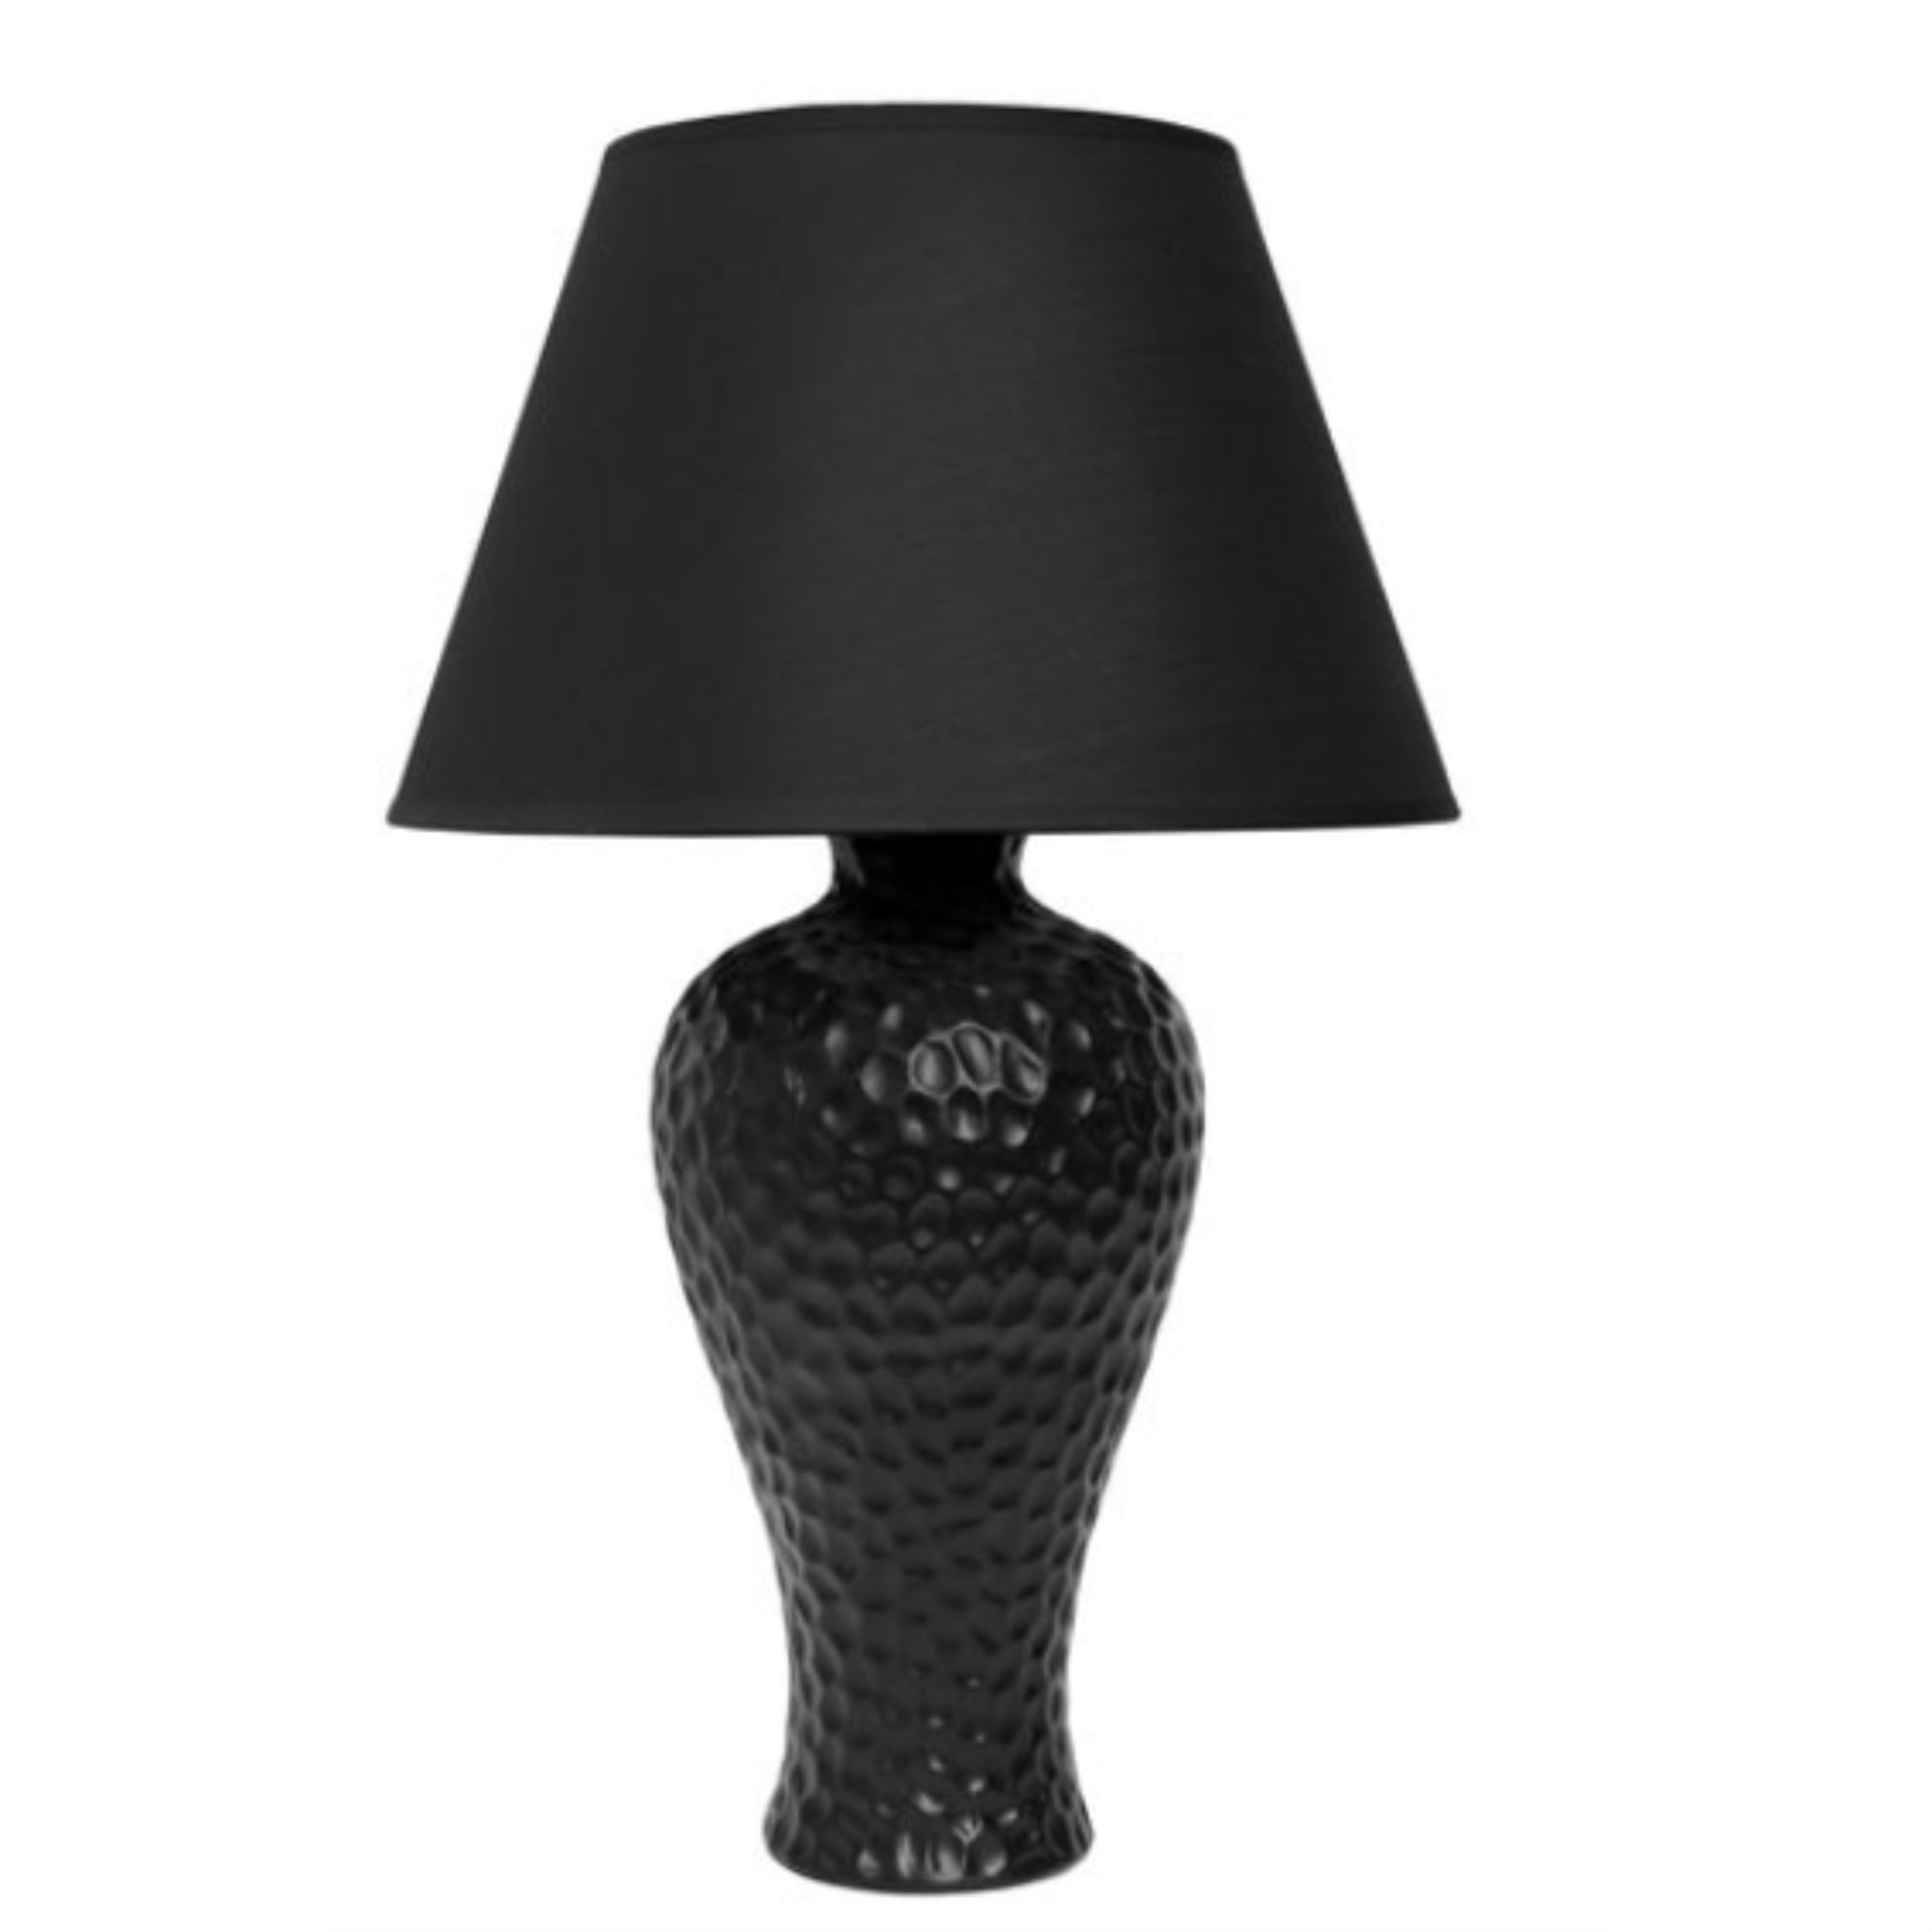 Simple Designs Black Texturized Curvy Ceramic Table Lamp